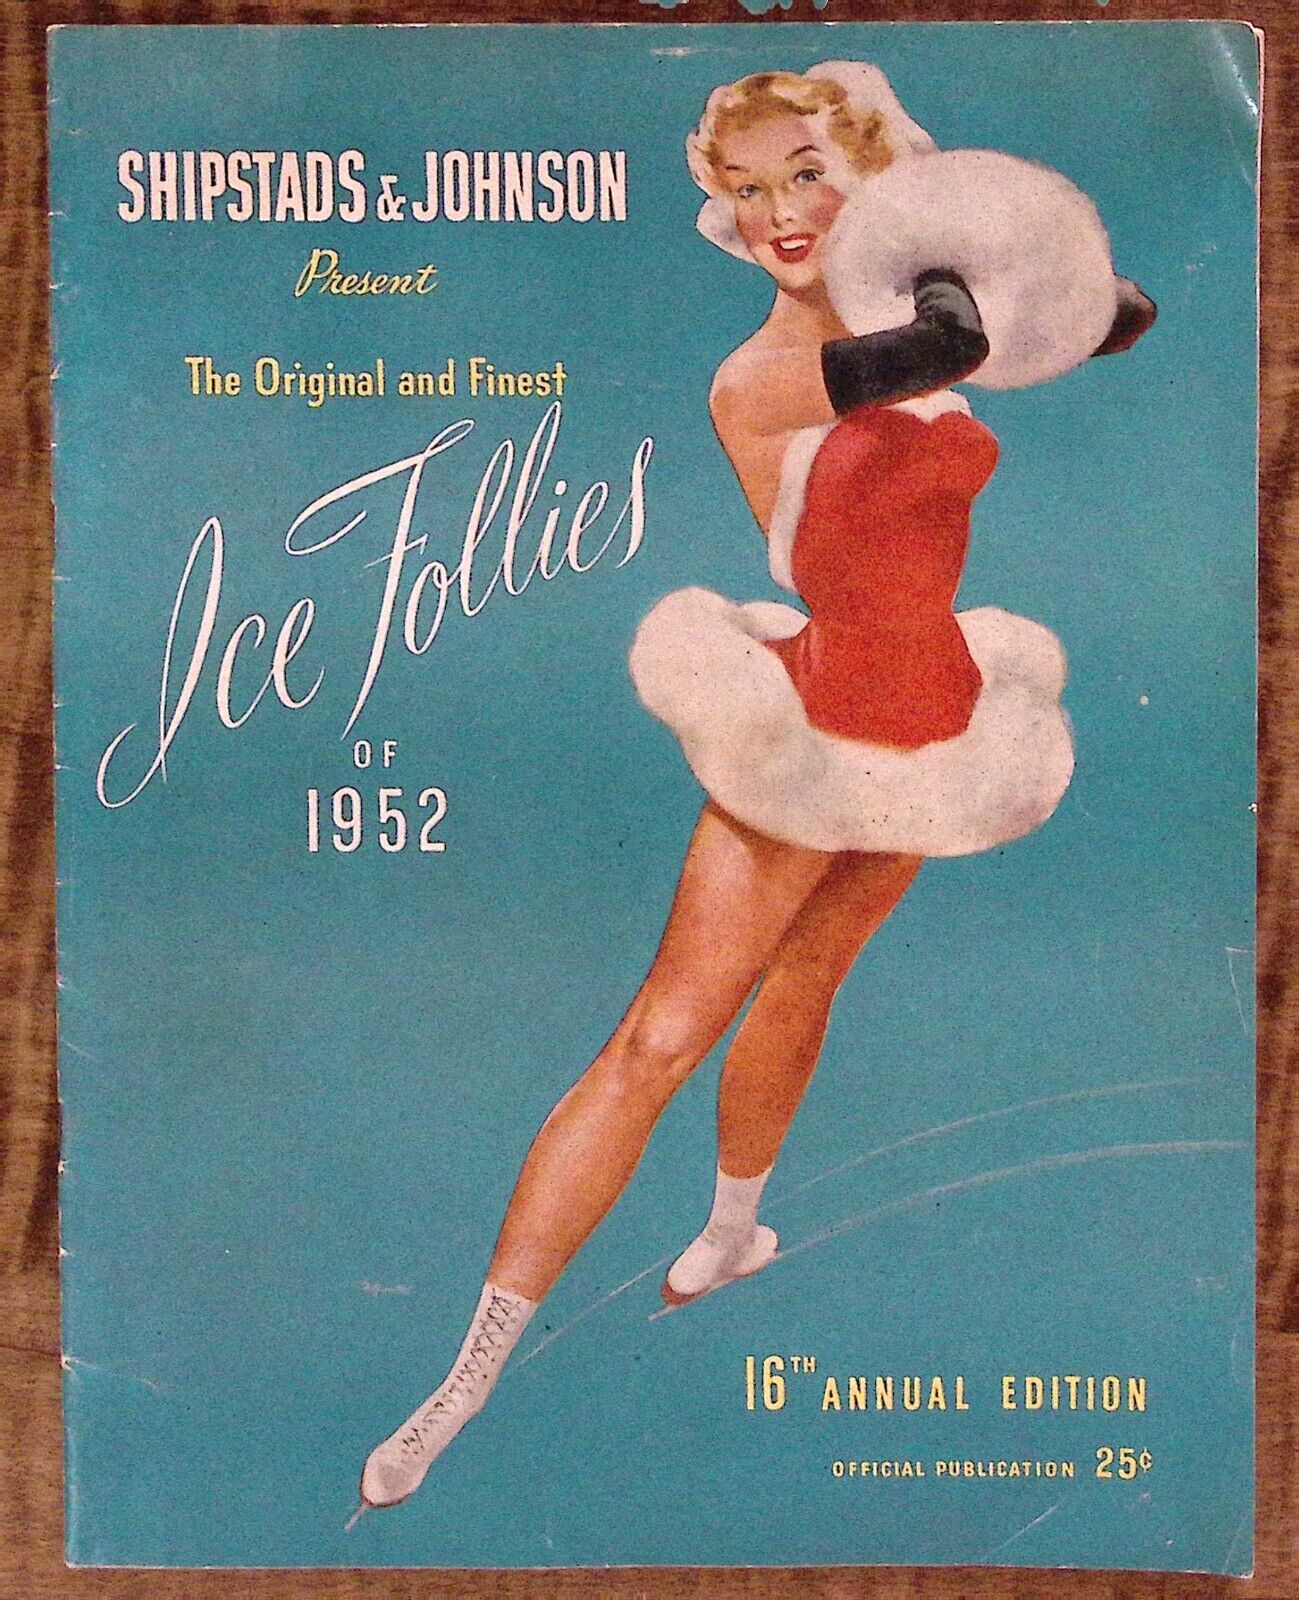 VINTAGE 1952 SHIPSTADS & JOHNSON ICE FOLLIES ICE SKATING SOUVENIR PROGRAM  Z3765